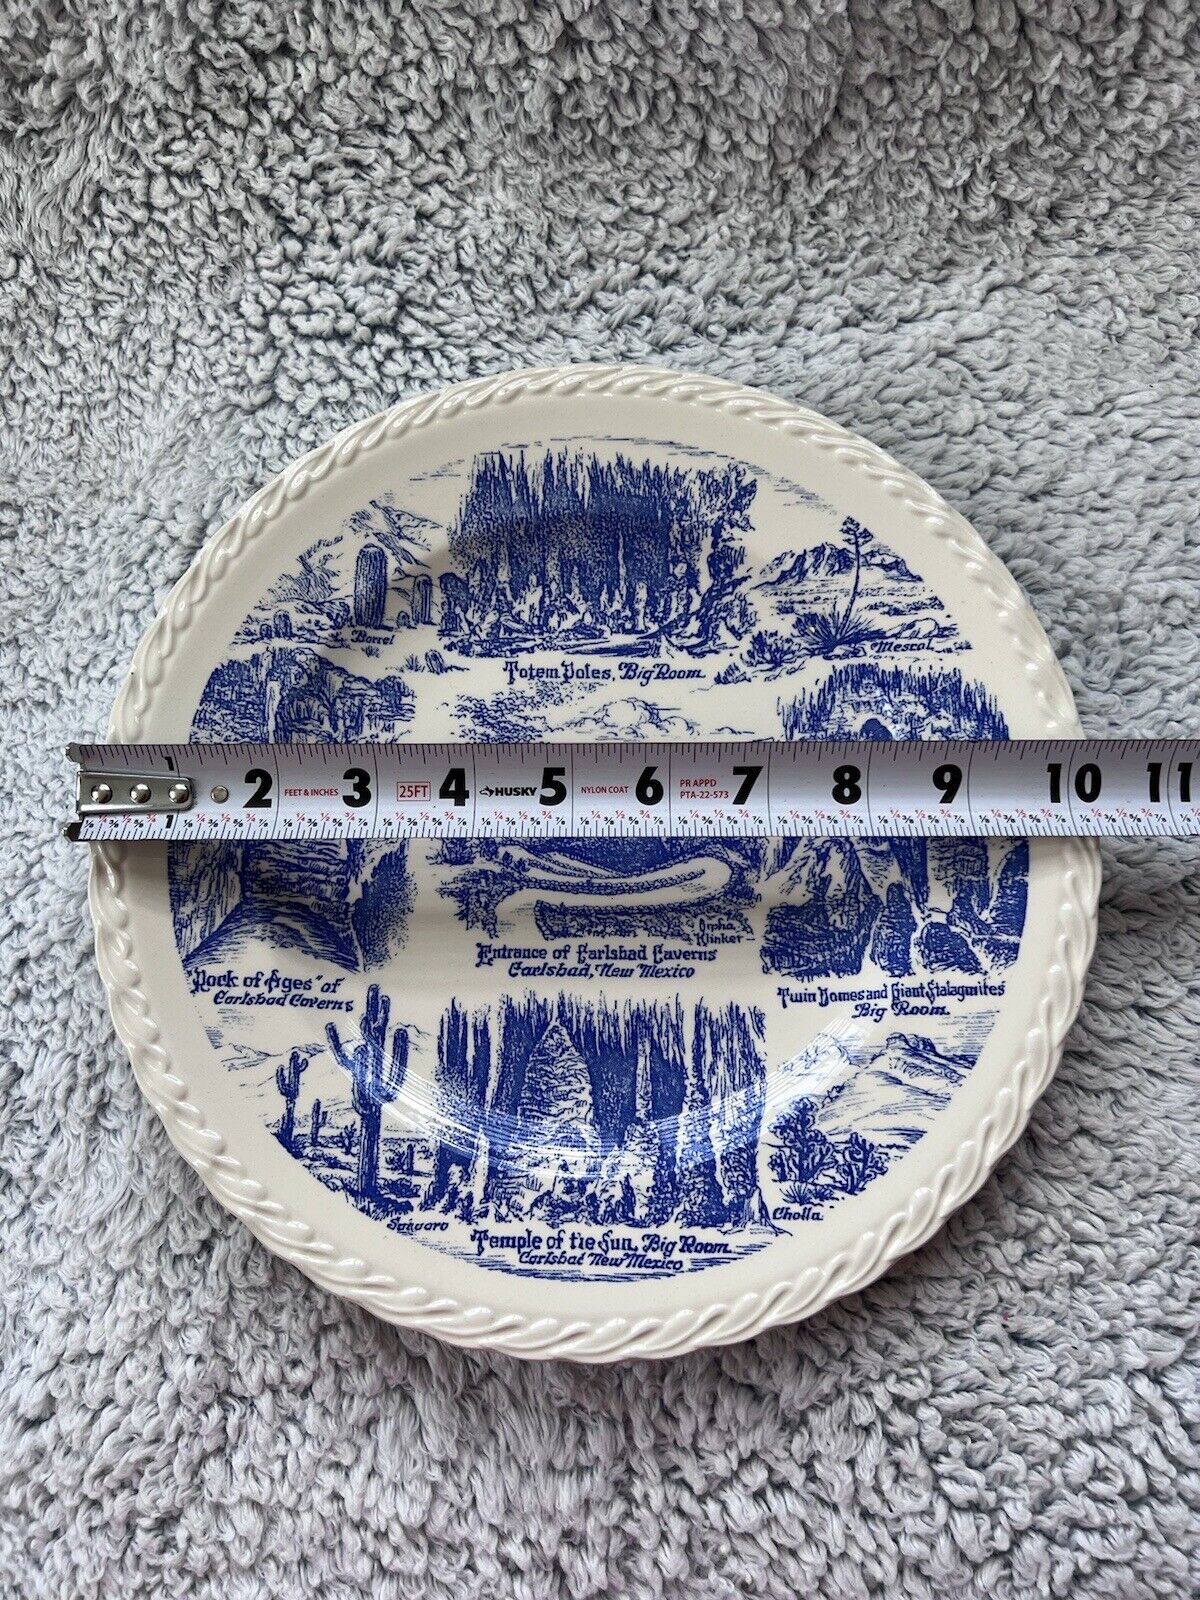 Vernon Kilns Carlsbad Caverns New Mexico Blue Transfer Ware Souvenir Plate 10.5" Без бренда - фотография #4